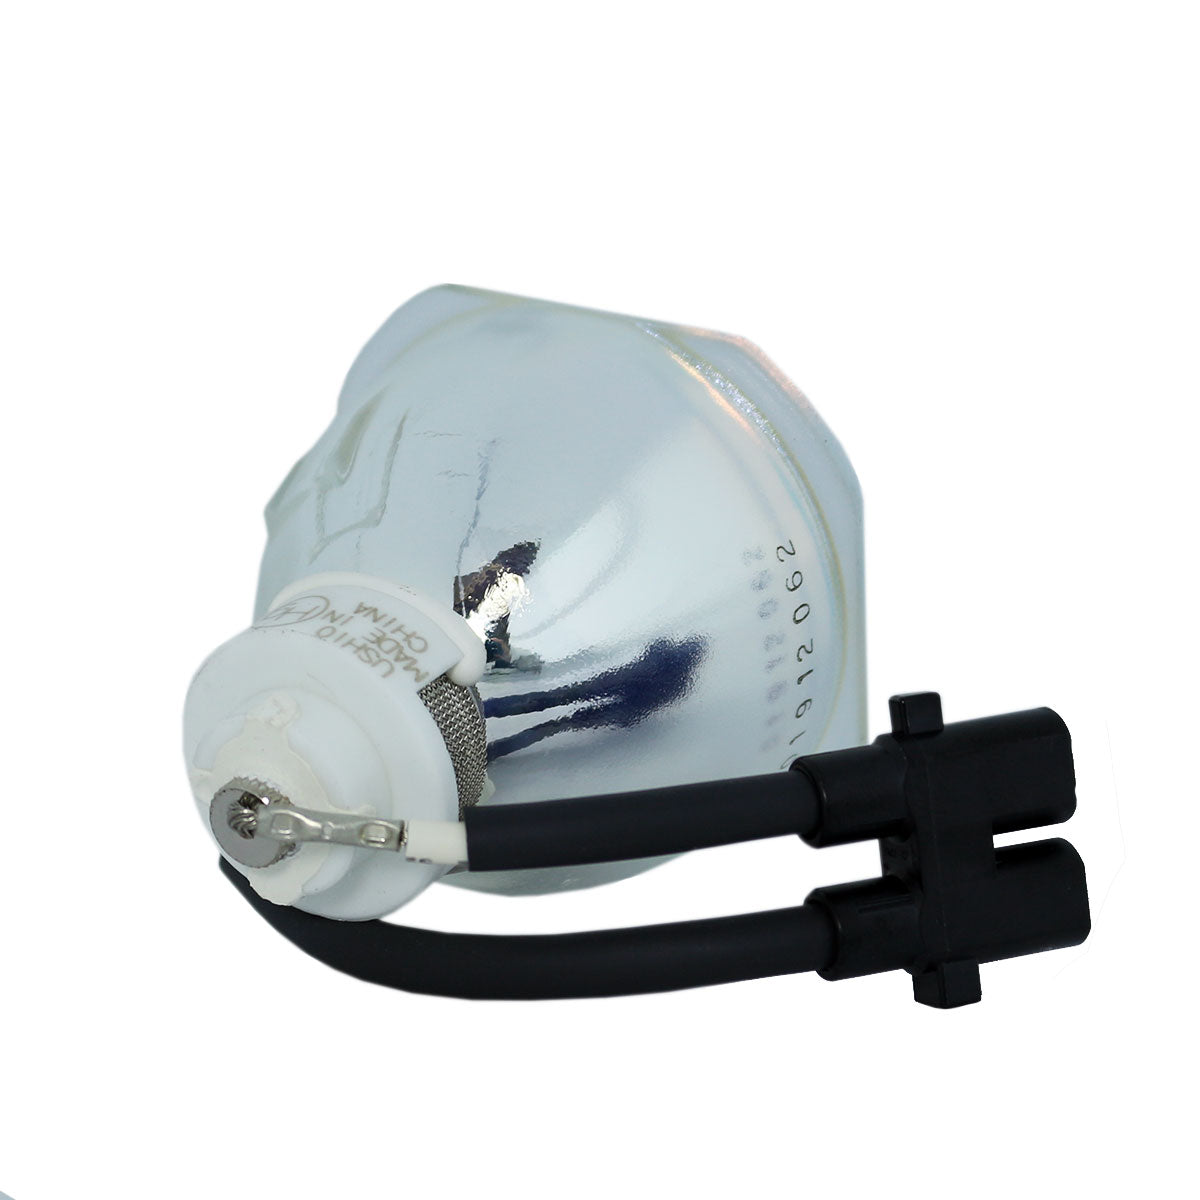 PLUS U5-200 Ushio Projector Bare Lamp